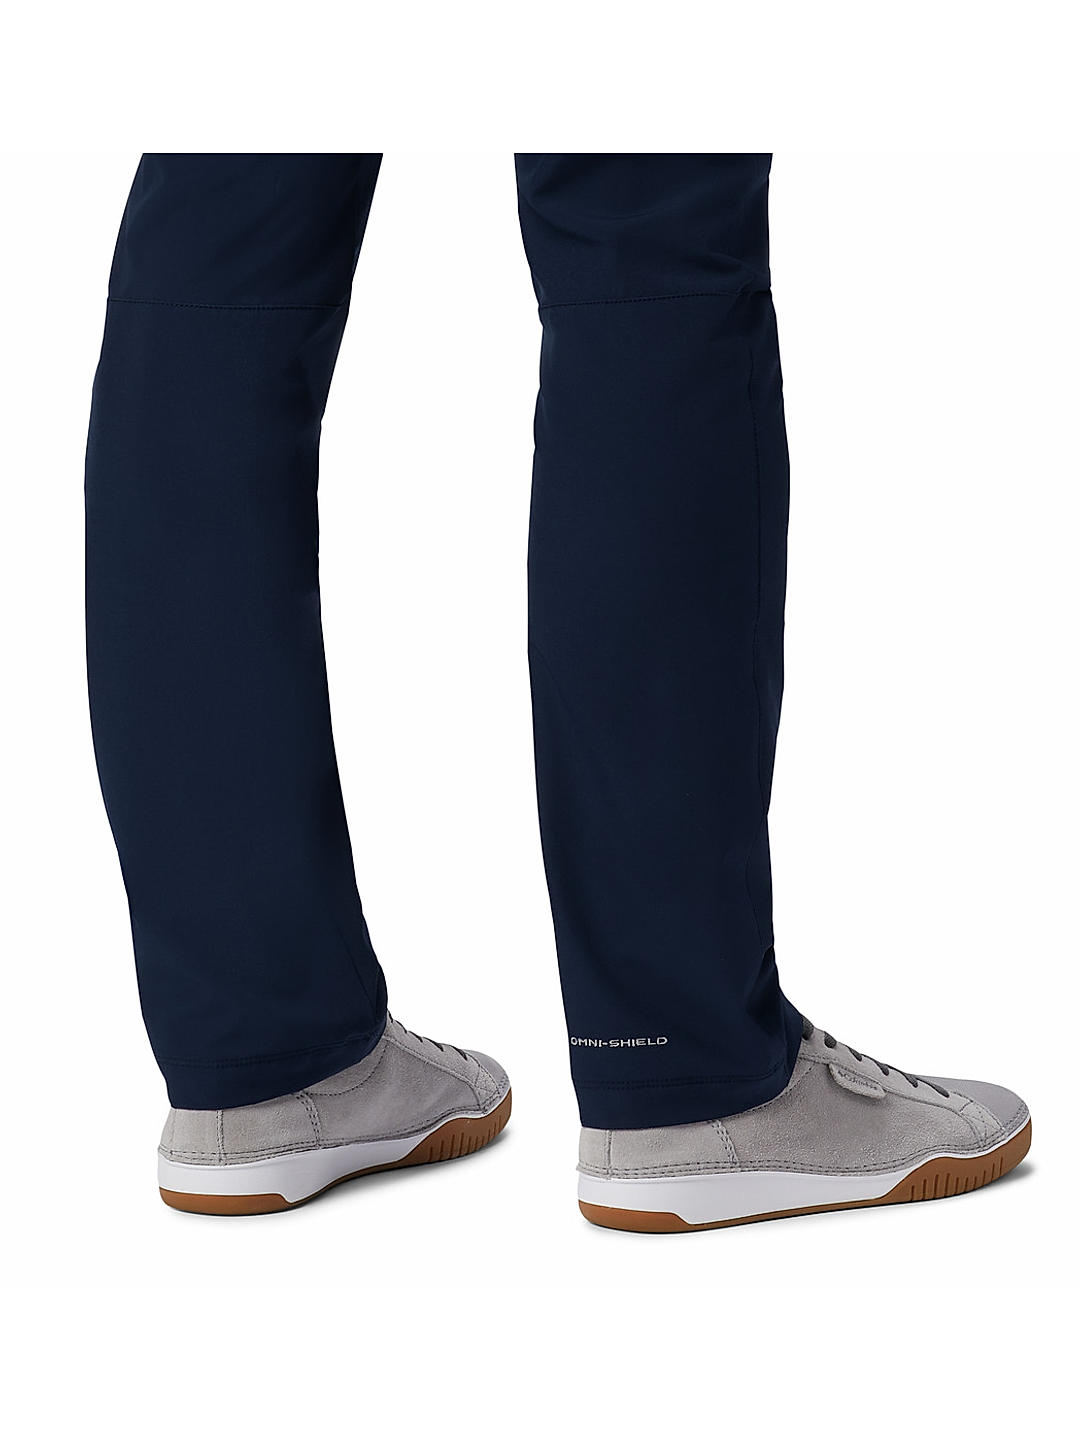 Columbia Outdoor Elements Stretch Pant - Men's outdoor pants